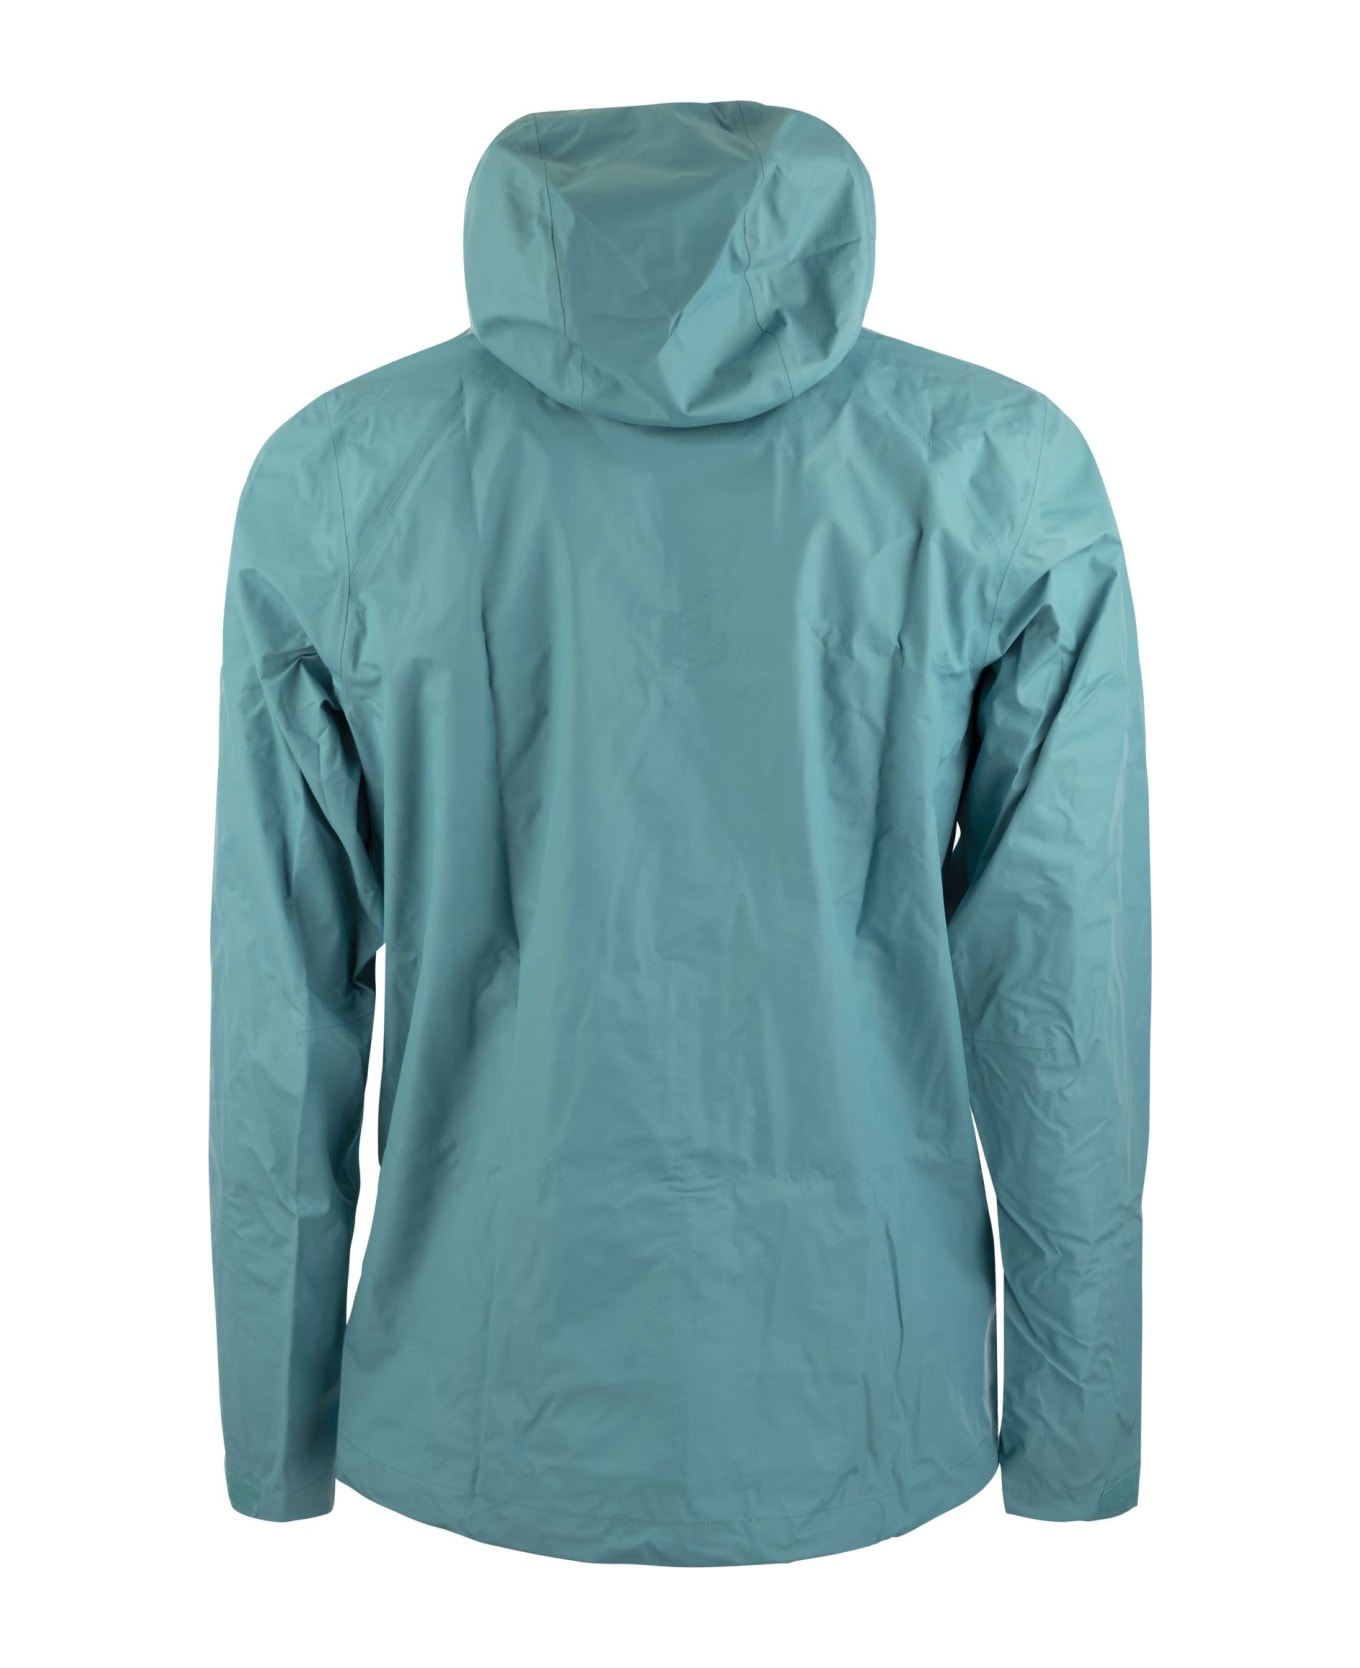 Patagonia Nylon Rainproof Jacket - Light Blue ジャケット